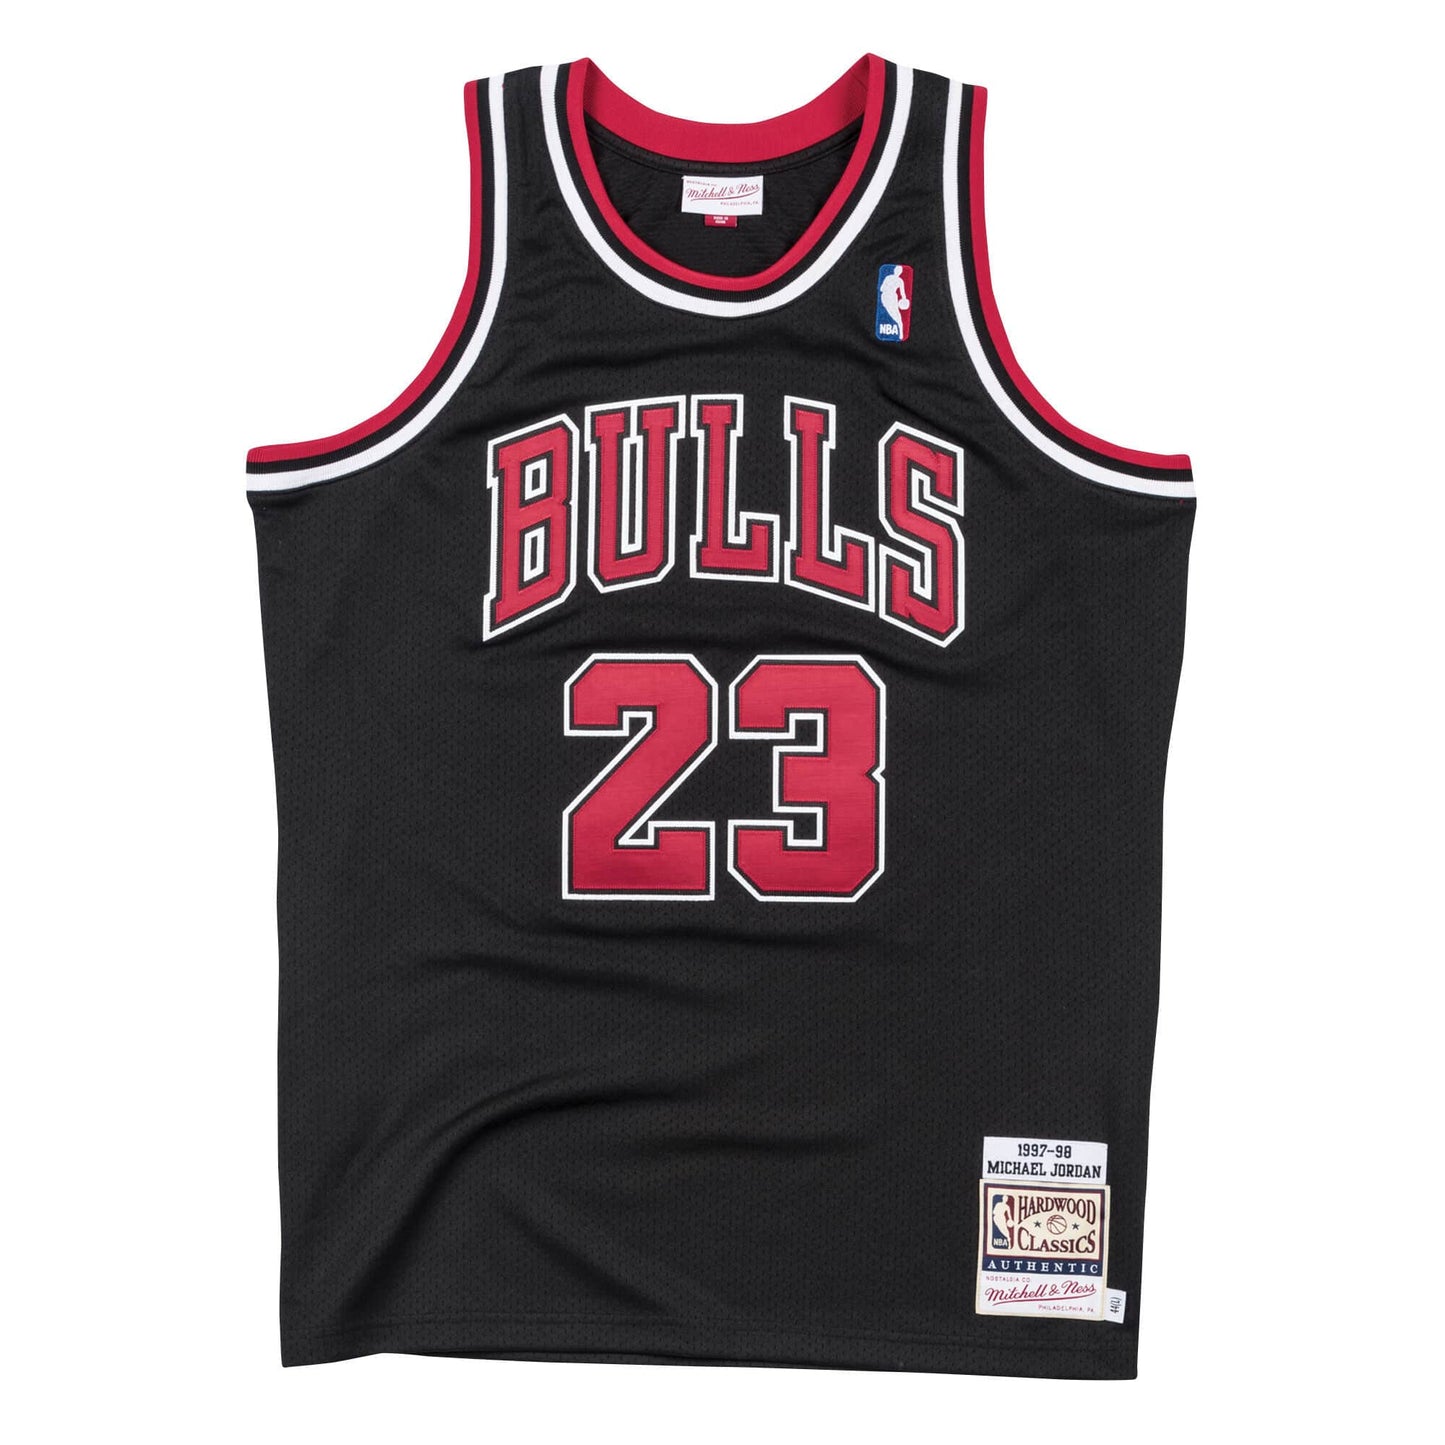 Authentic Jersey Chicago Bulls Alternate 1997-98 Michael Jordans